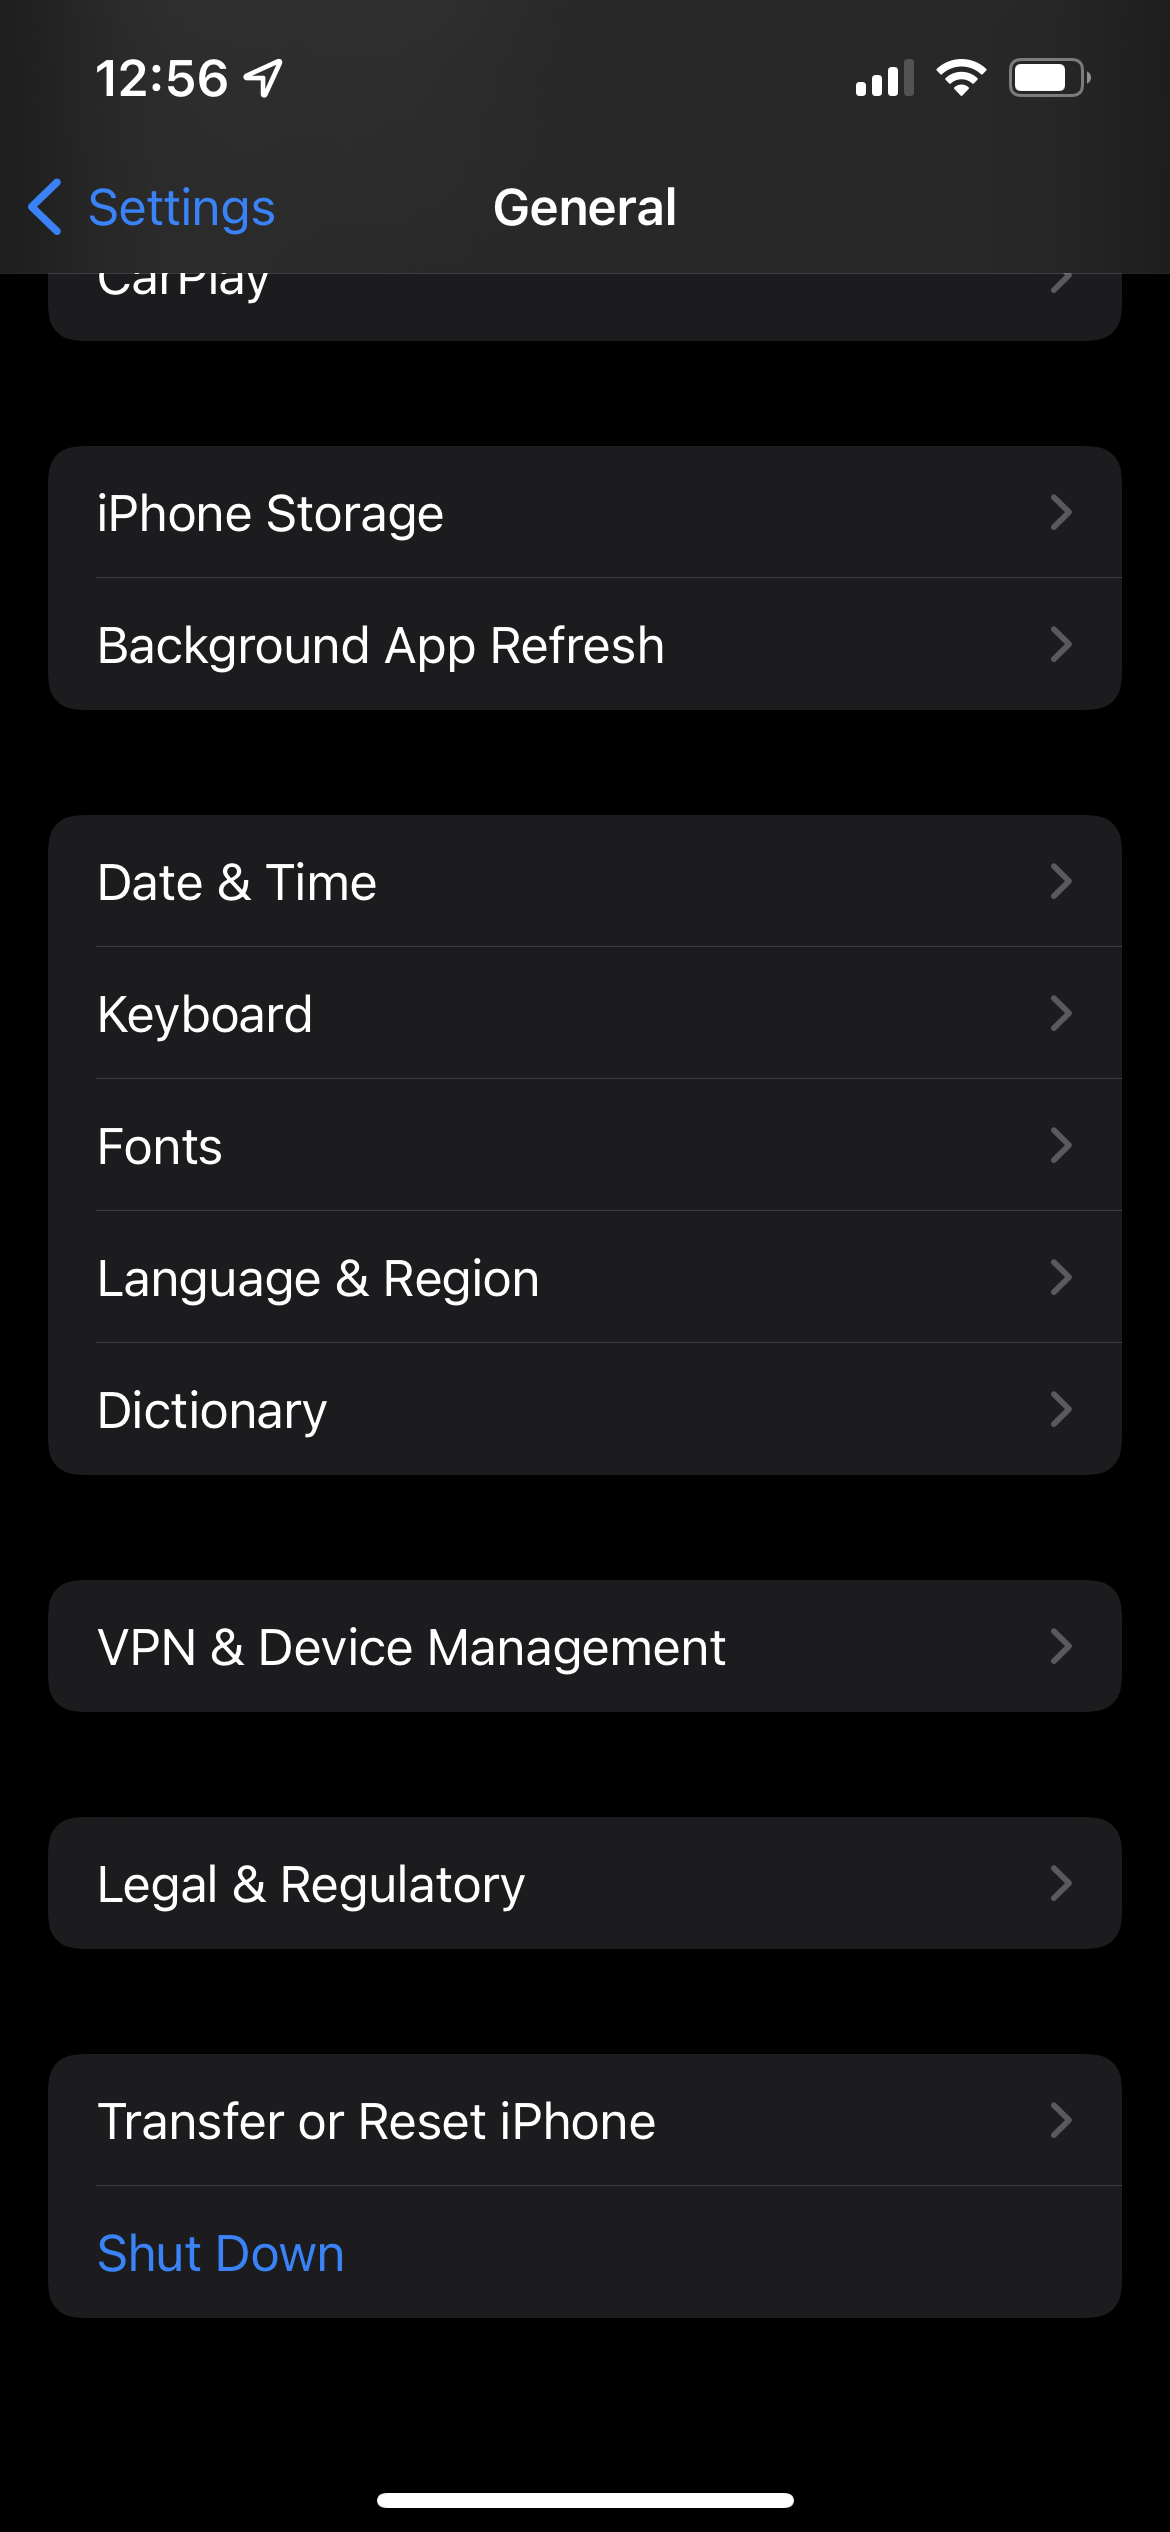 General settings options in iOS 15